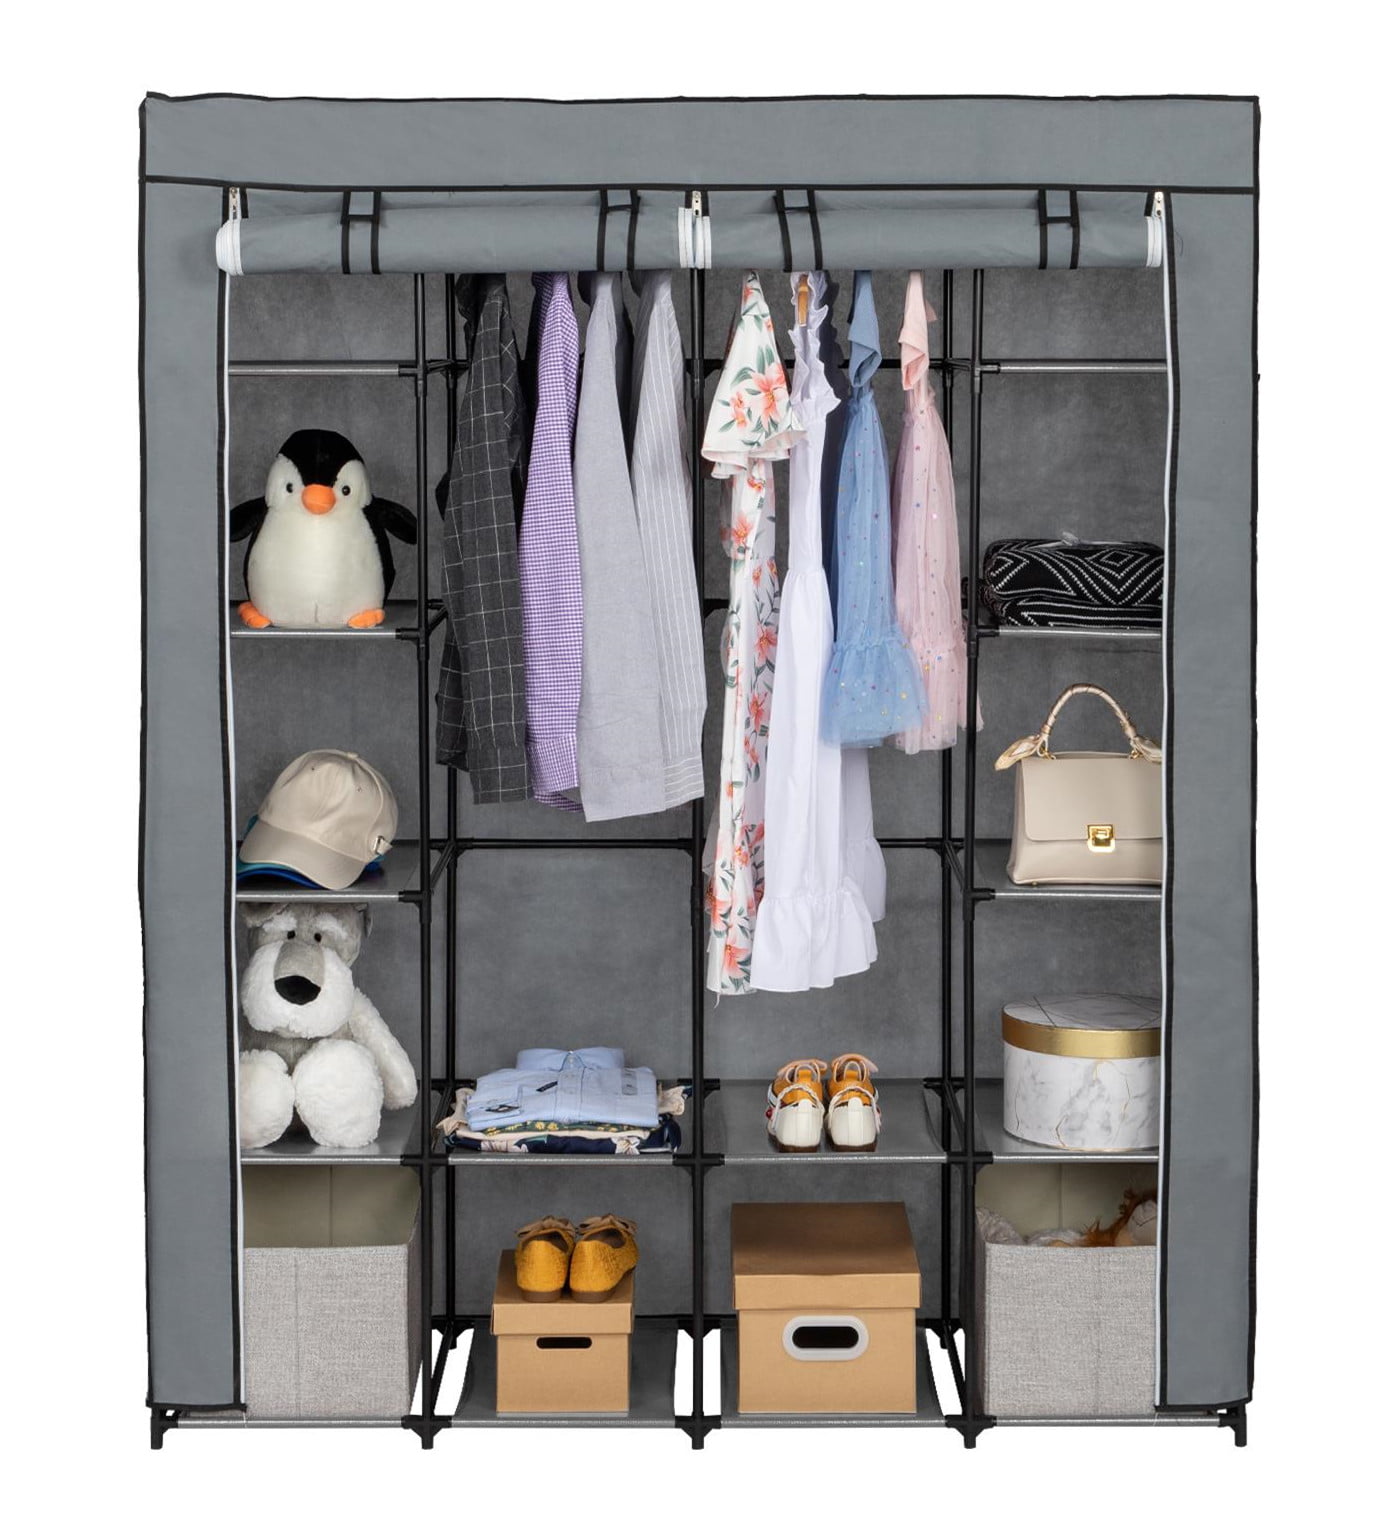 5 Layer Portable Closet Wardrobe Clothes Rack Storage Organizer w/ Cover Gray 